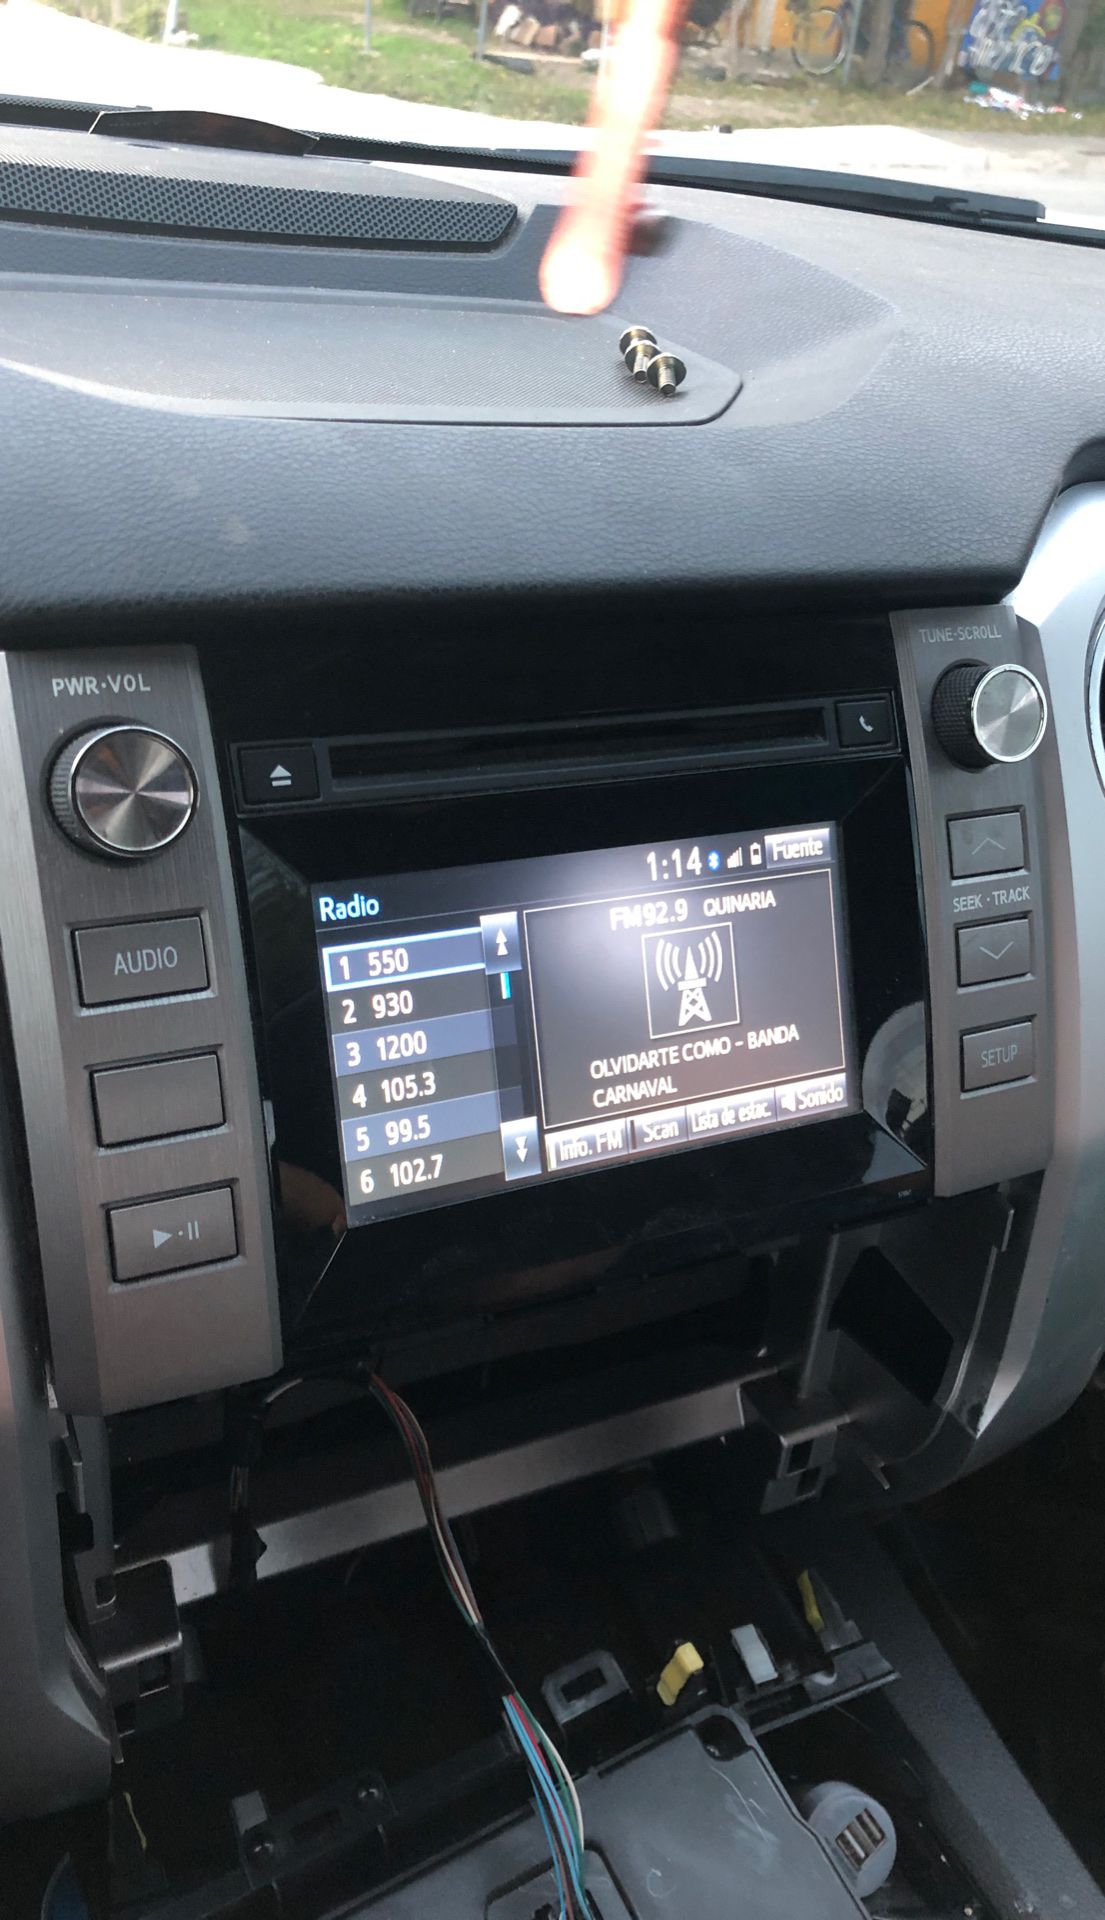 2015 Toyota Tundra radio